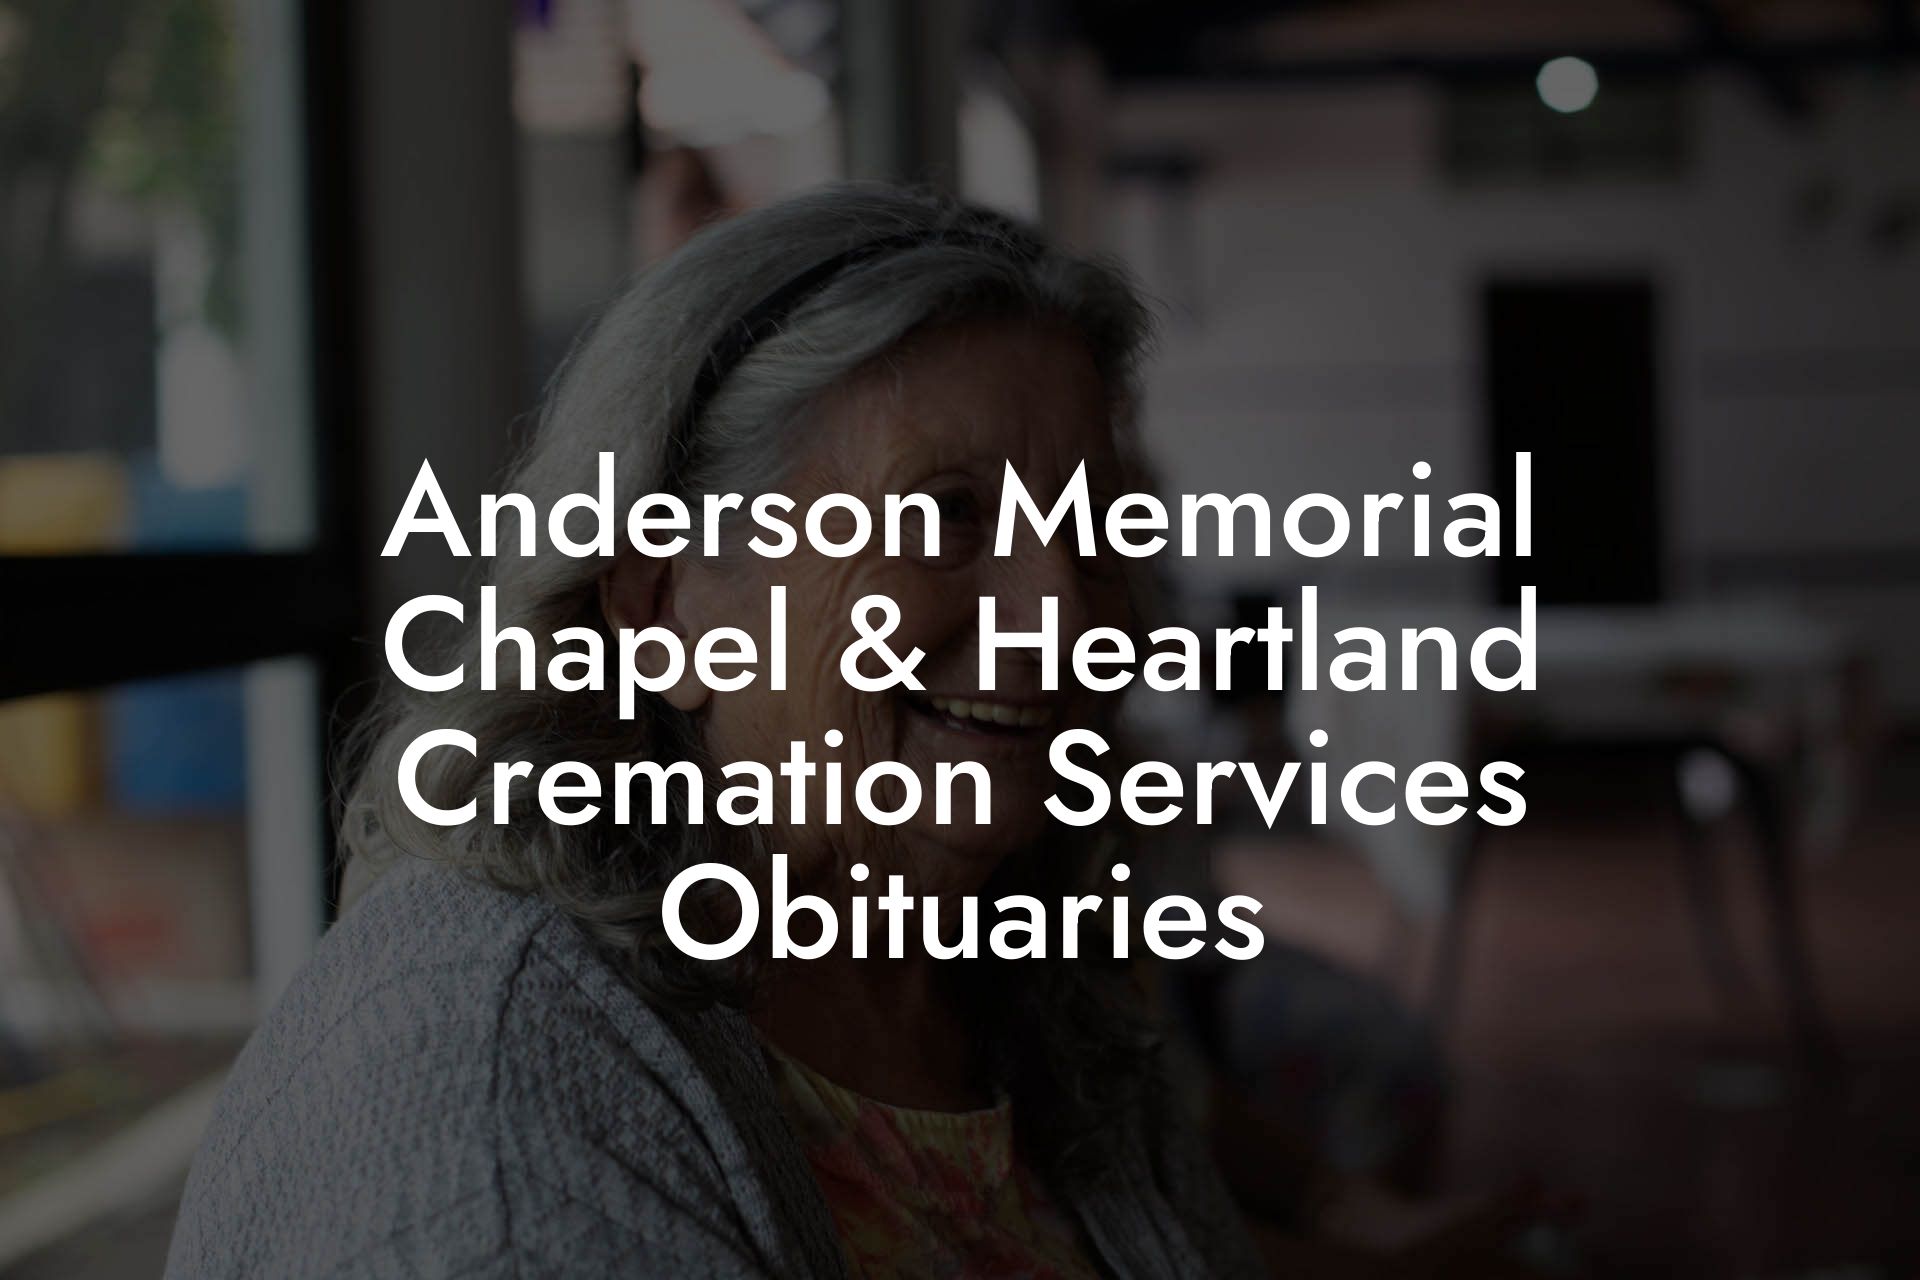 Anderson Memorial Chapel & Heartland Cremation Services Obituaries